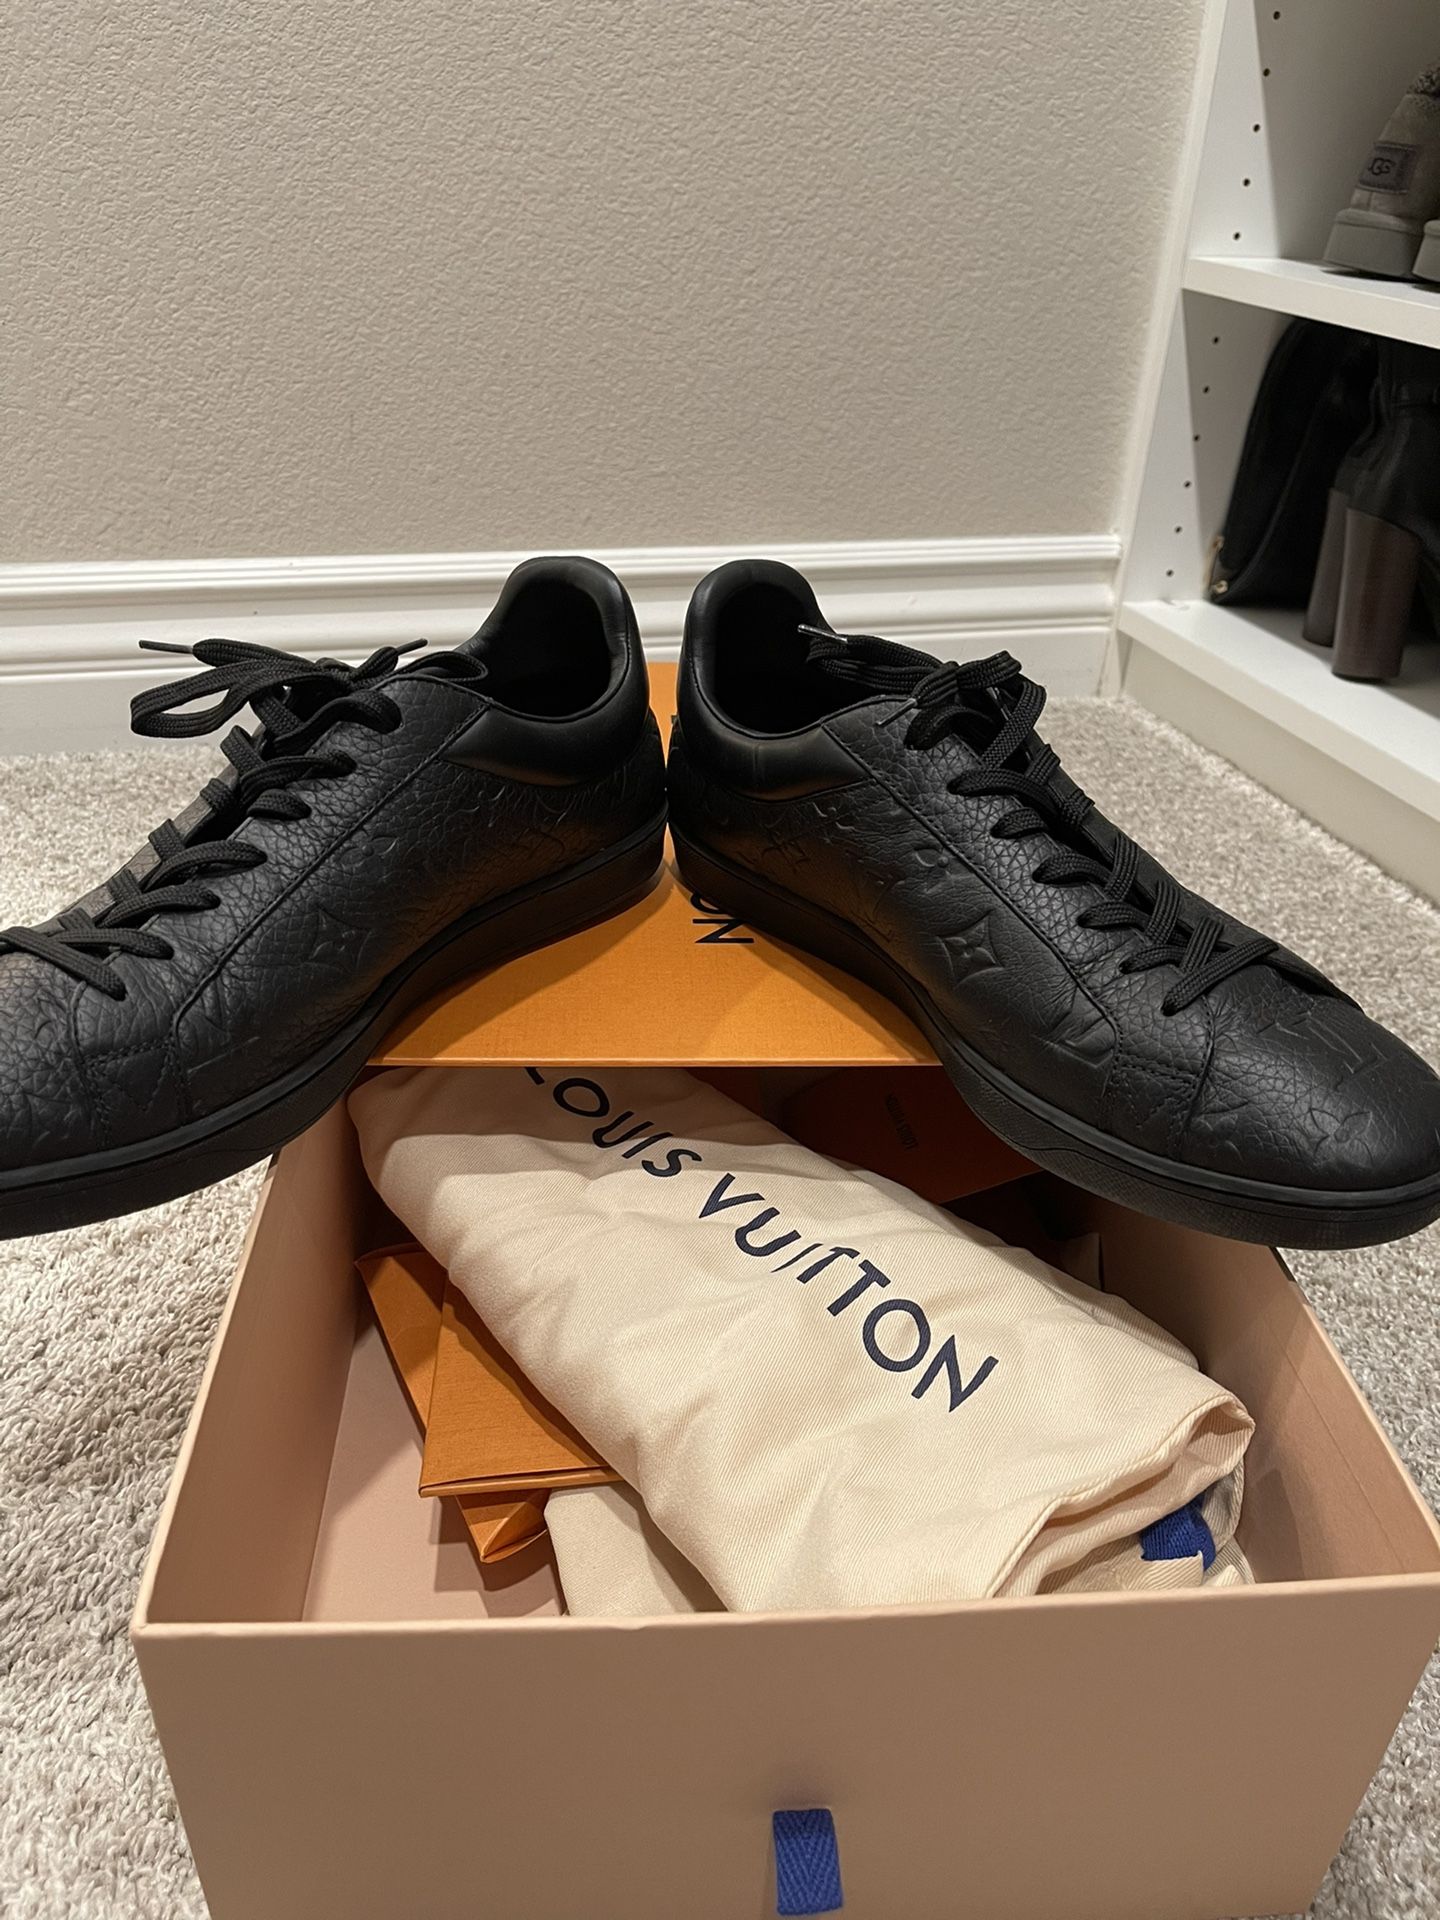 LOUIS VUITTON Mens Sneakers ORIGINAL for Sale in Yorba Linda, CA - OfferUp